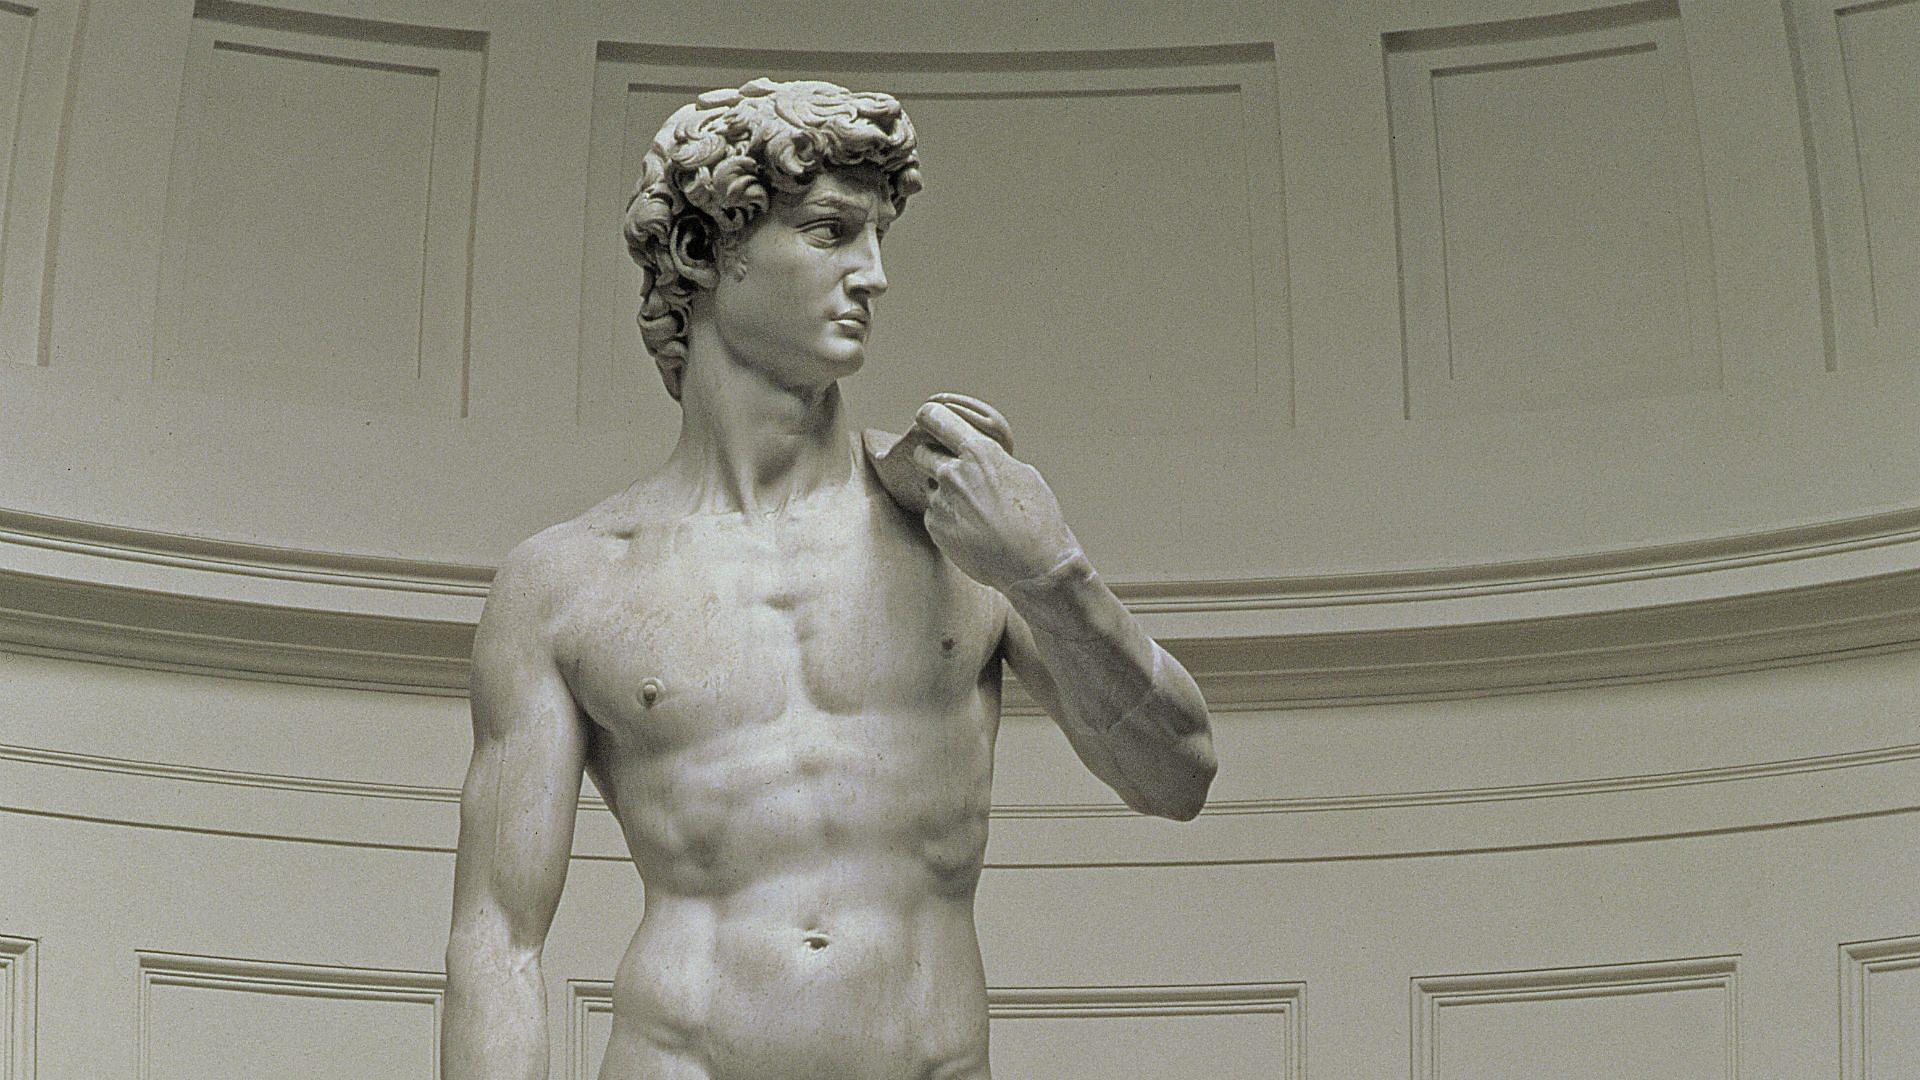 Hannah Gadsby: Arts Clown: Michelangelo's David, BBC, Free